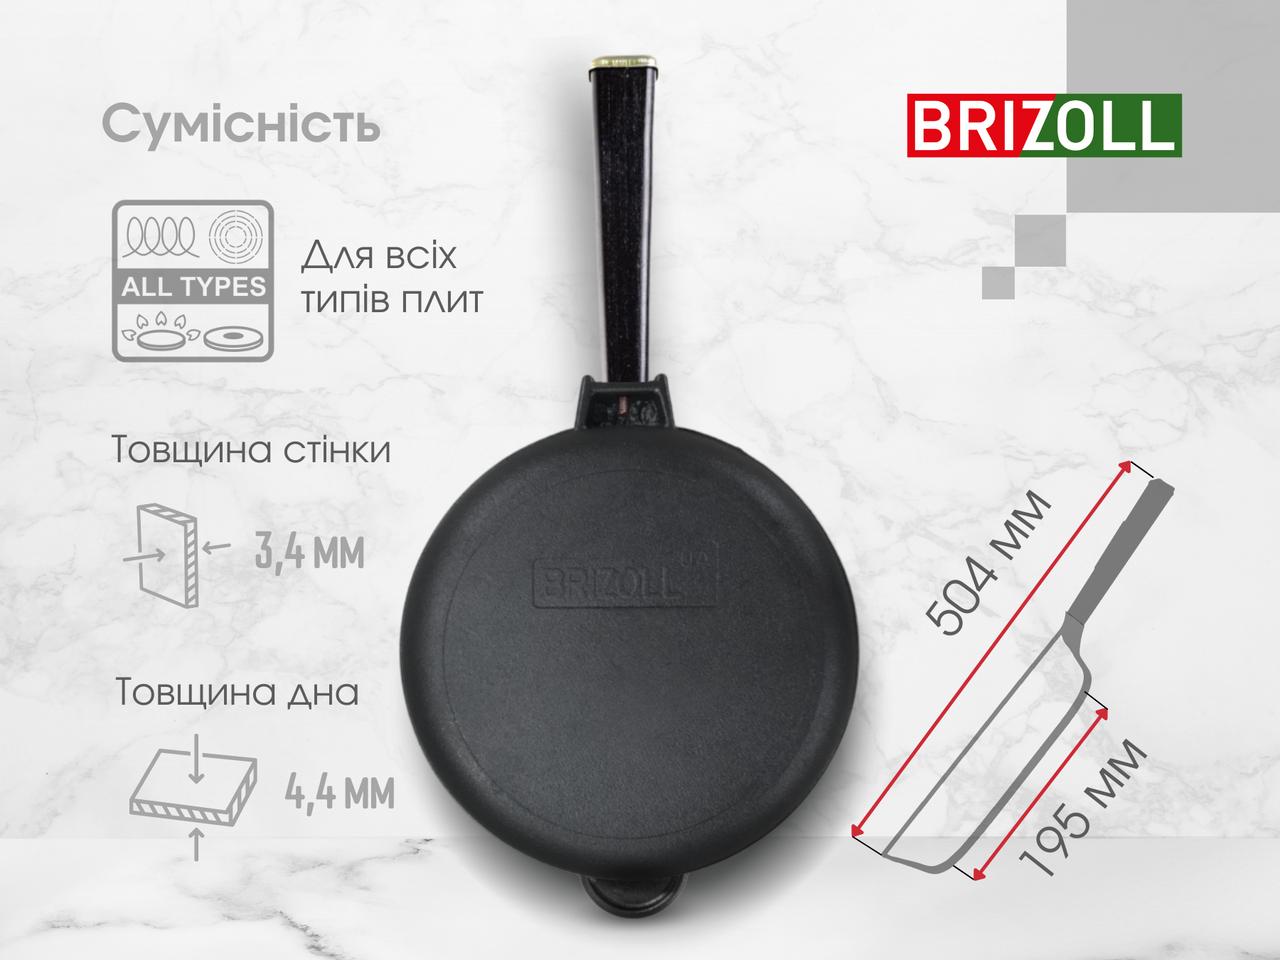 Cast iron pan with a lid Optima-Black 260 х 60 mm